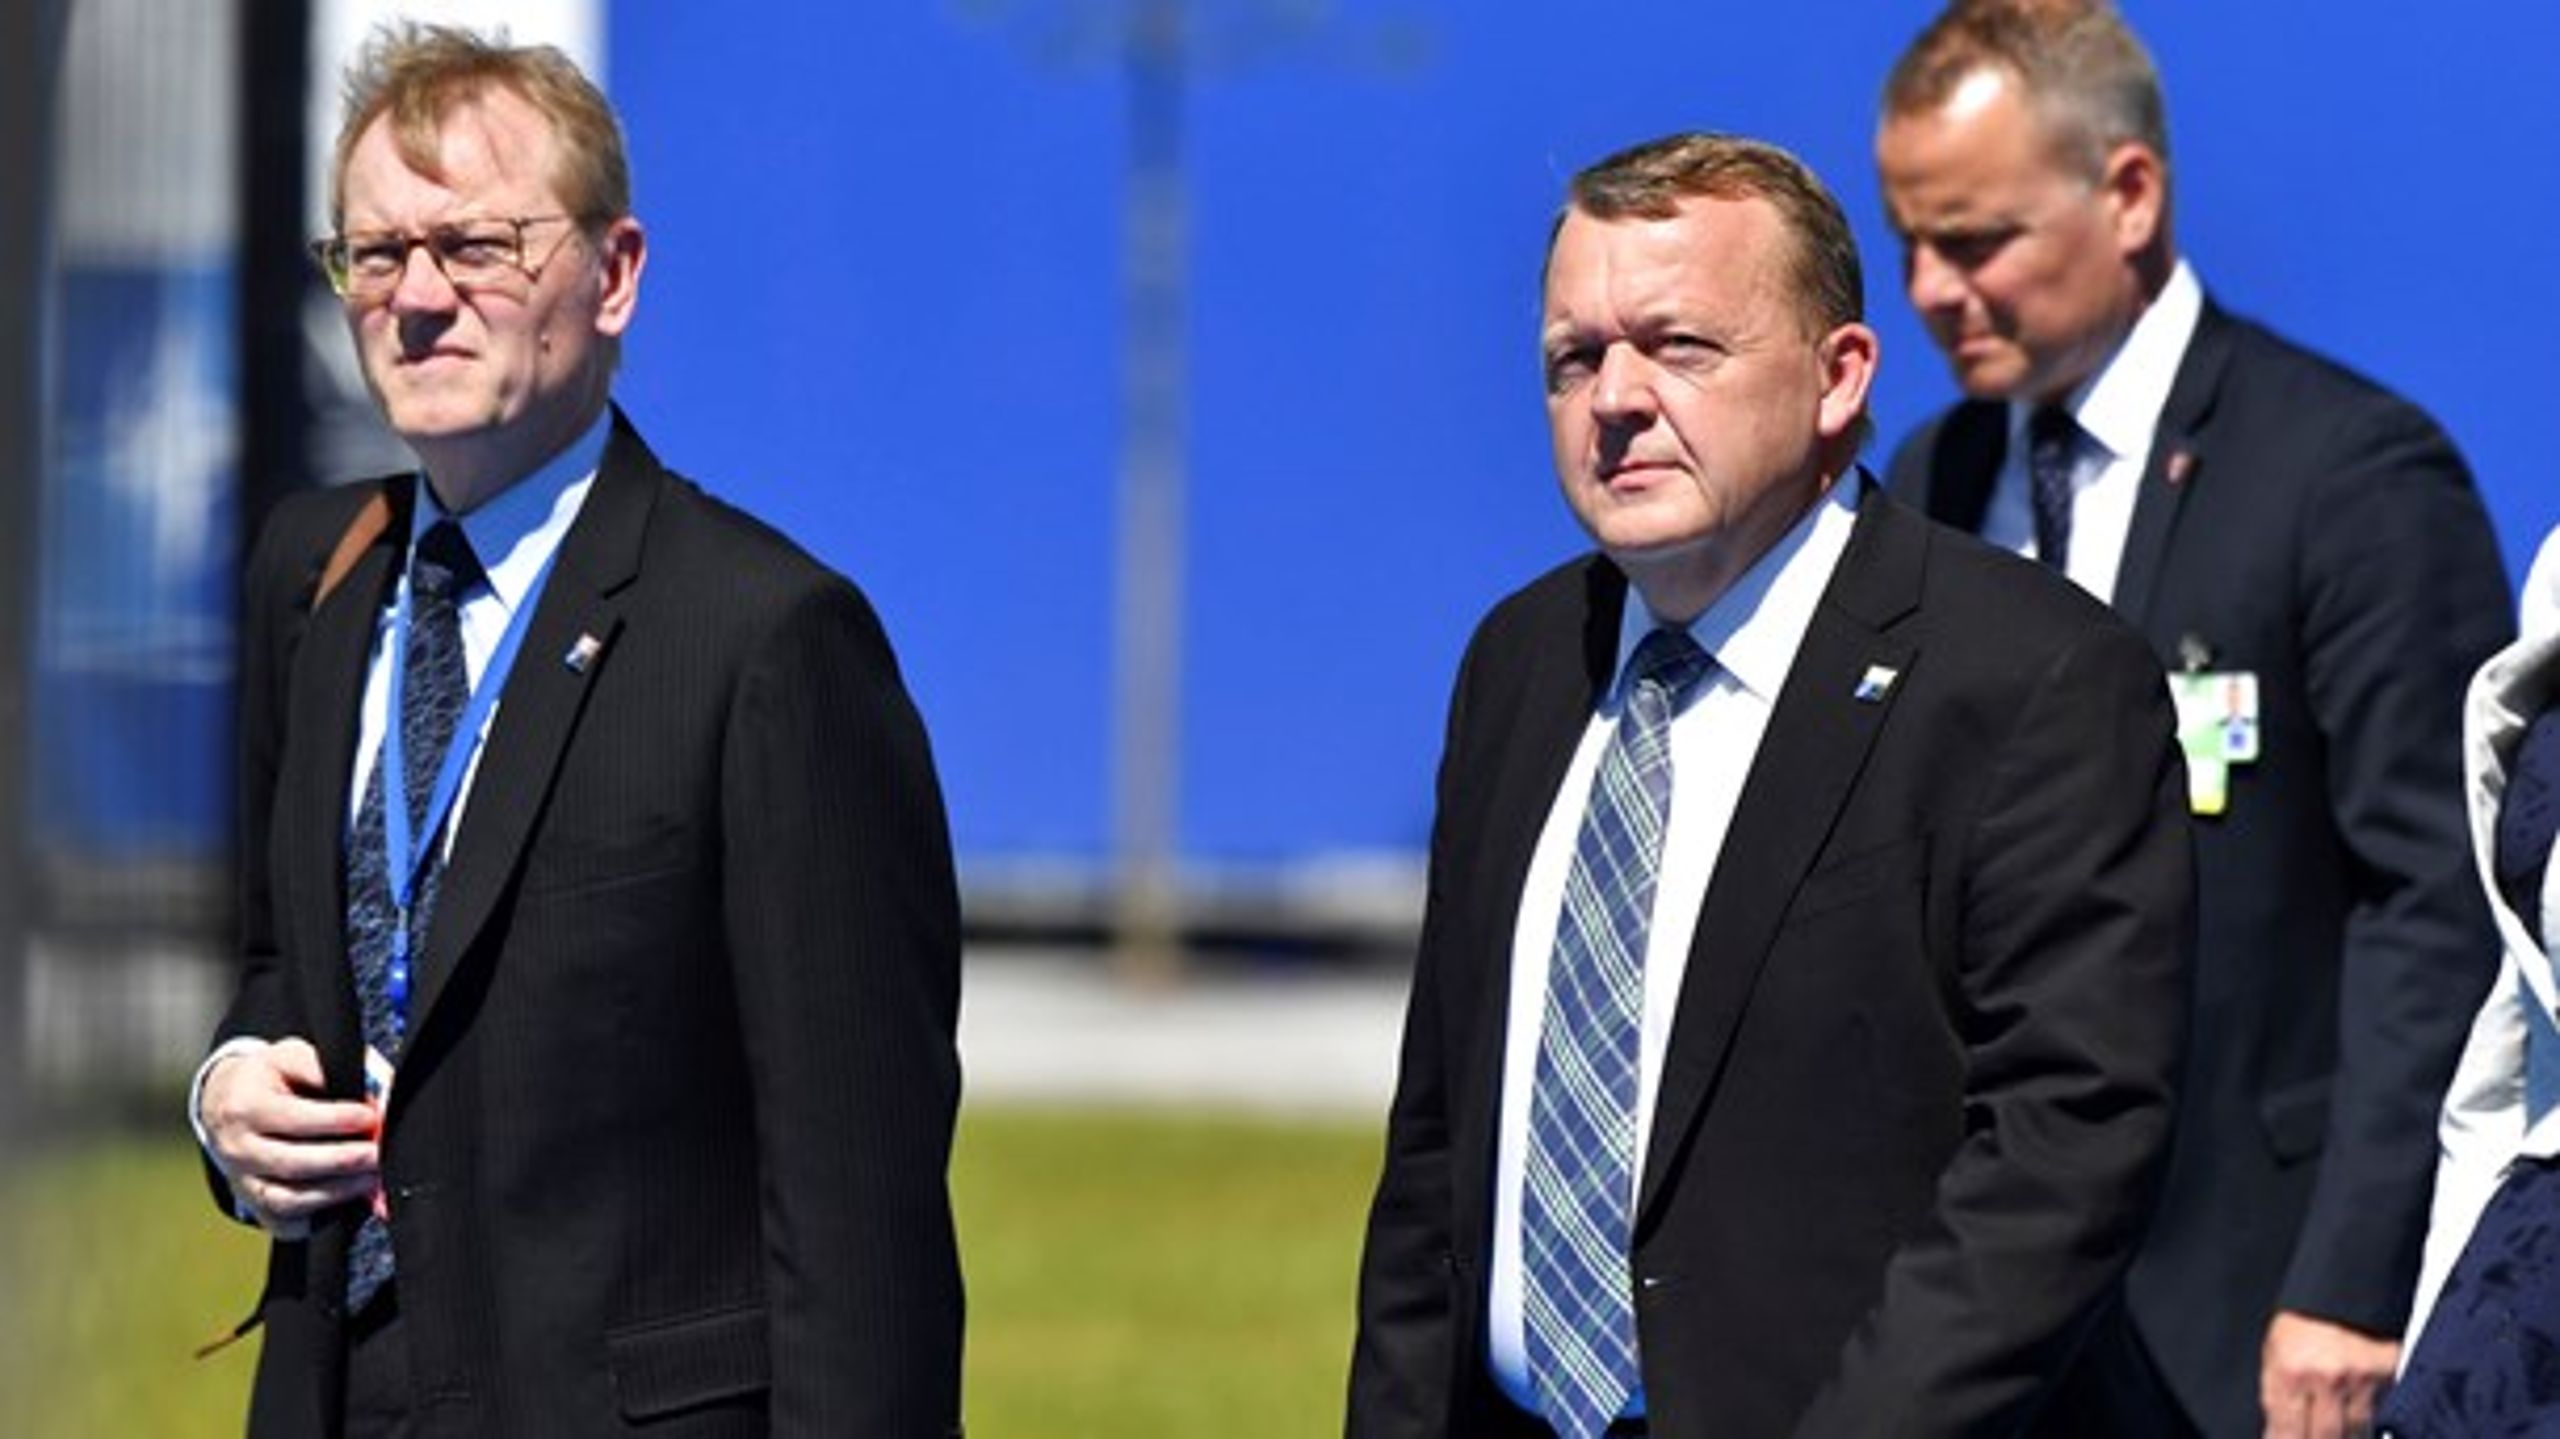 Danmark har afsat penge nok til forsvar, siger ambassadør Michael Zilmer-Johns (t.v.), der her ses sammen med statsminister Lars Løkke Rasmussen (V) under sidste års Nato-topmøde.